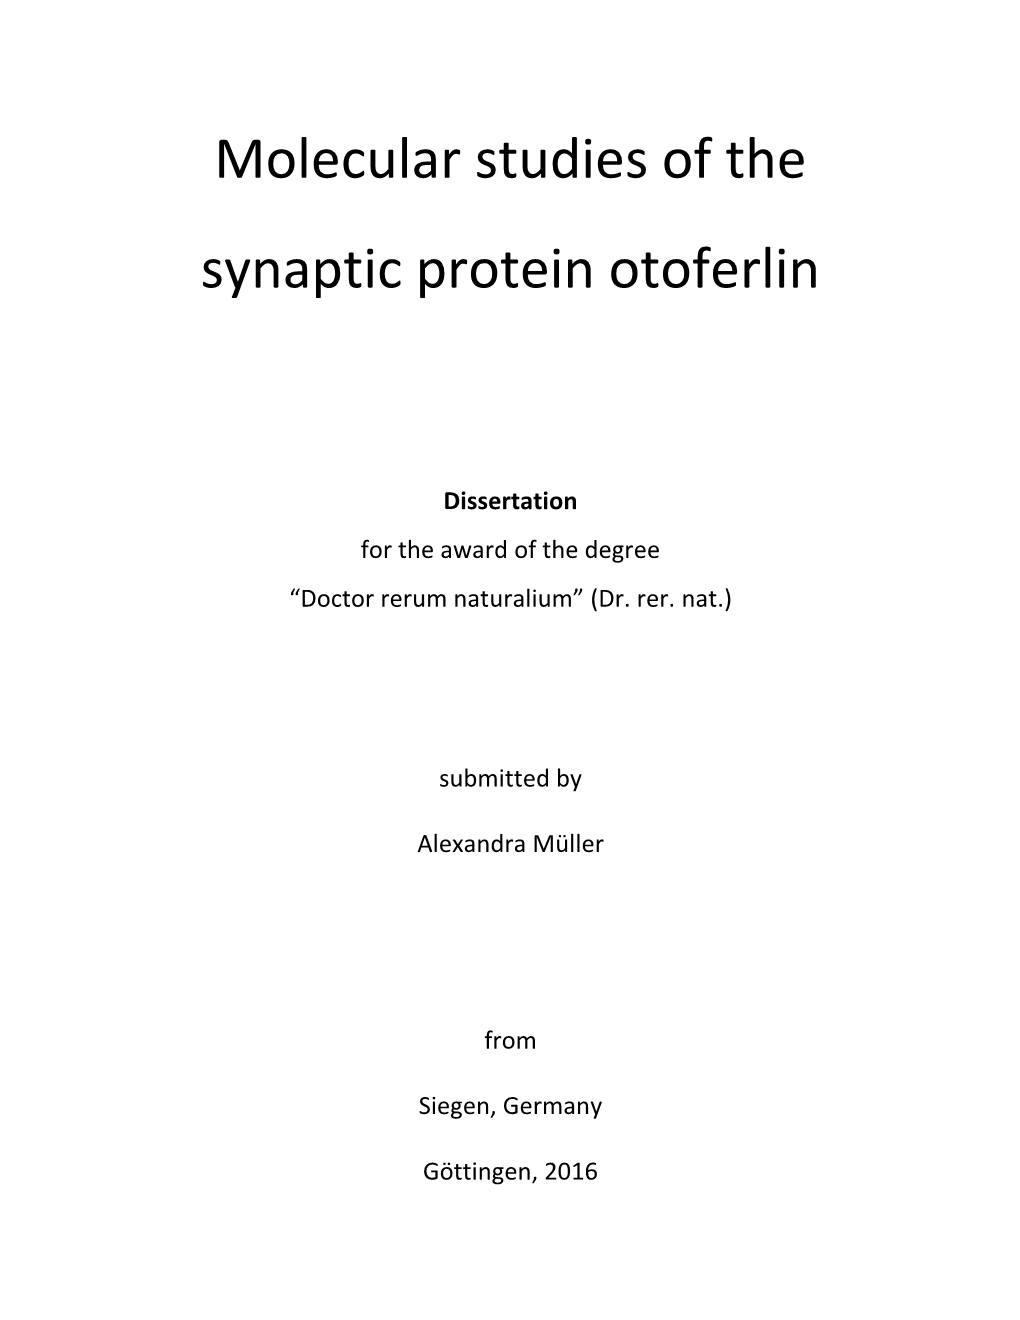 Molecular Studies of the Synaptic Protein Otoferlin